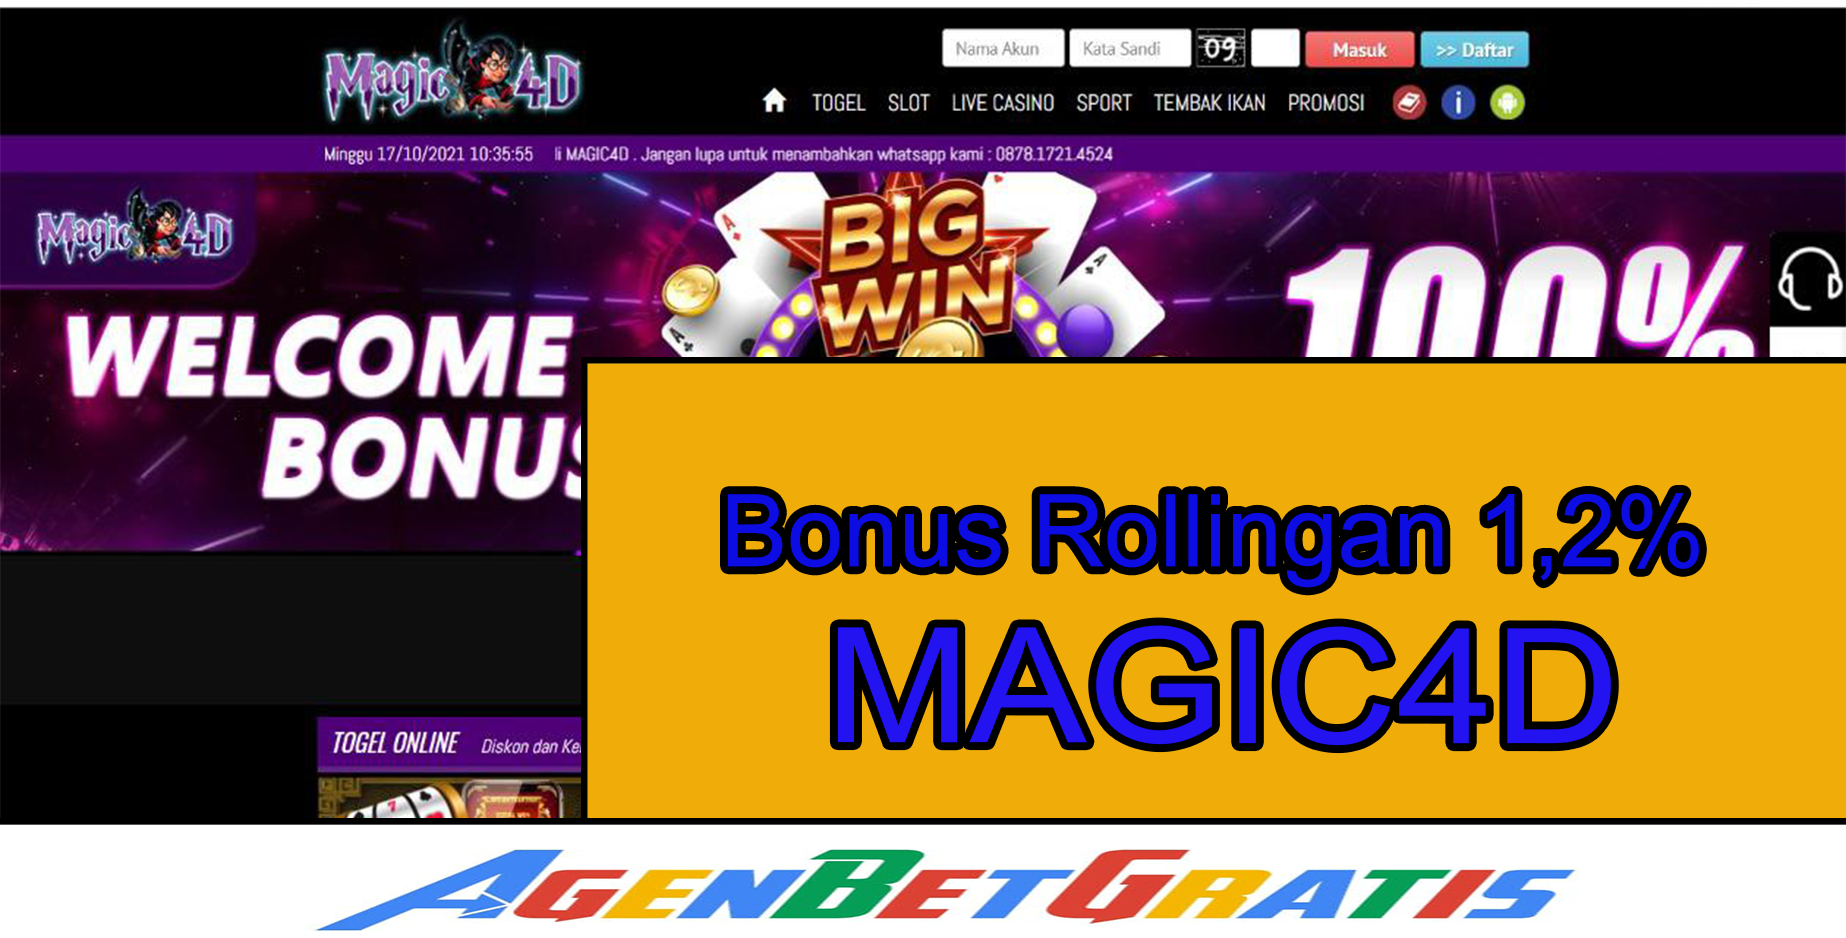 MAGIC4D - Bonus Rollingan 1,2%